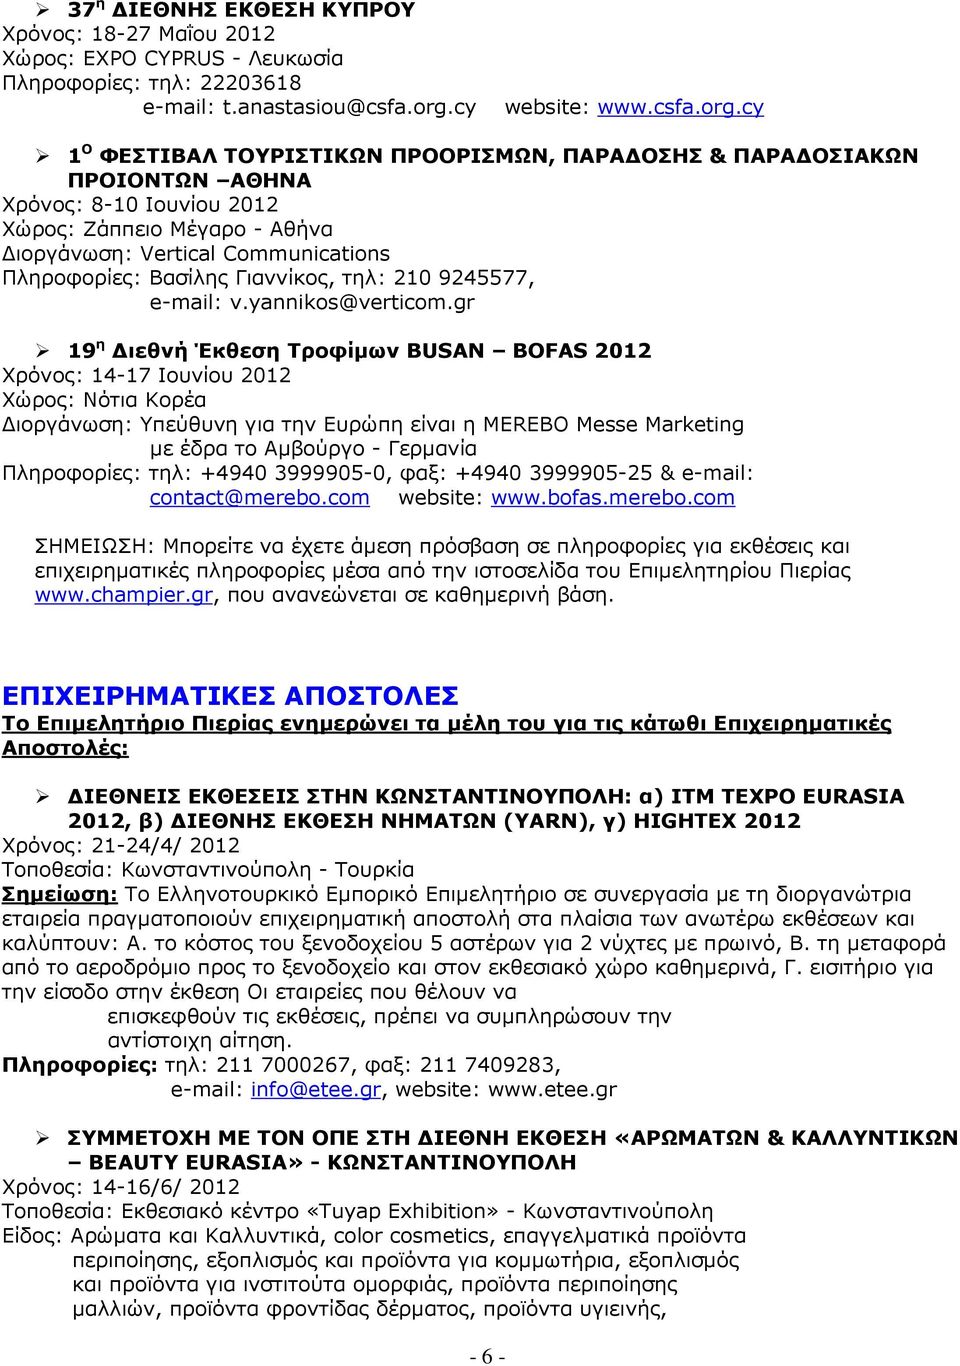 cy 1 Ο ΦΕΣΤΙΒΑΛ ΤΟΥΡΙΣΤΙΚΩΝ ΠΡΟΟΡΙΣΜΩΝ, ΠΑΡΑ ΟΣΗΣ & ΠΑΡΑ ΟΣΙΑΚΩΝ ΠΡΟΙΟΝΤΩΝ ΑΘΗΝΑ Χρόνος: 8-10 Ιουνίου 2012 Χώρος: Ζάππειο Μέγαρο - Αθήνα ιοργάνωση: Vertical Communications Πληροφορίες: Βασίλης